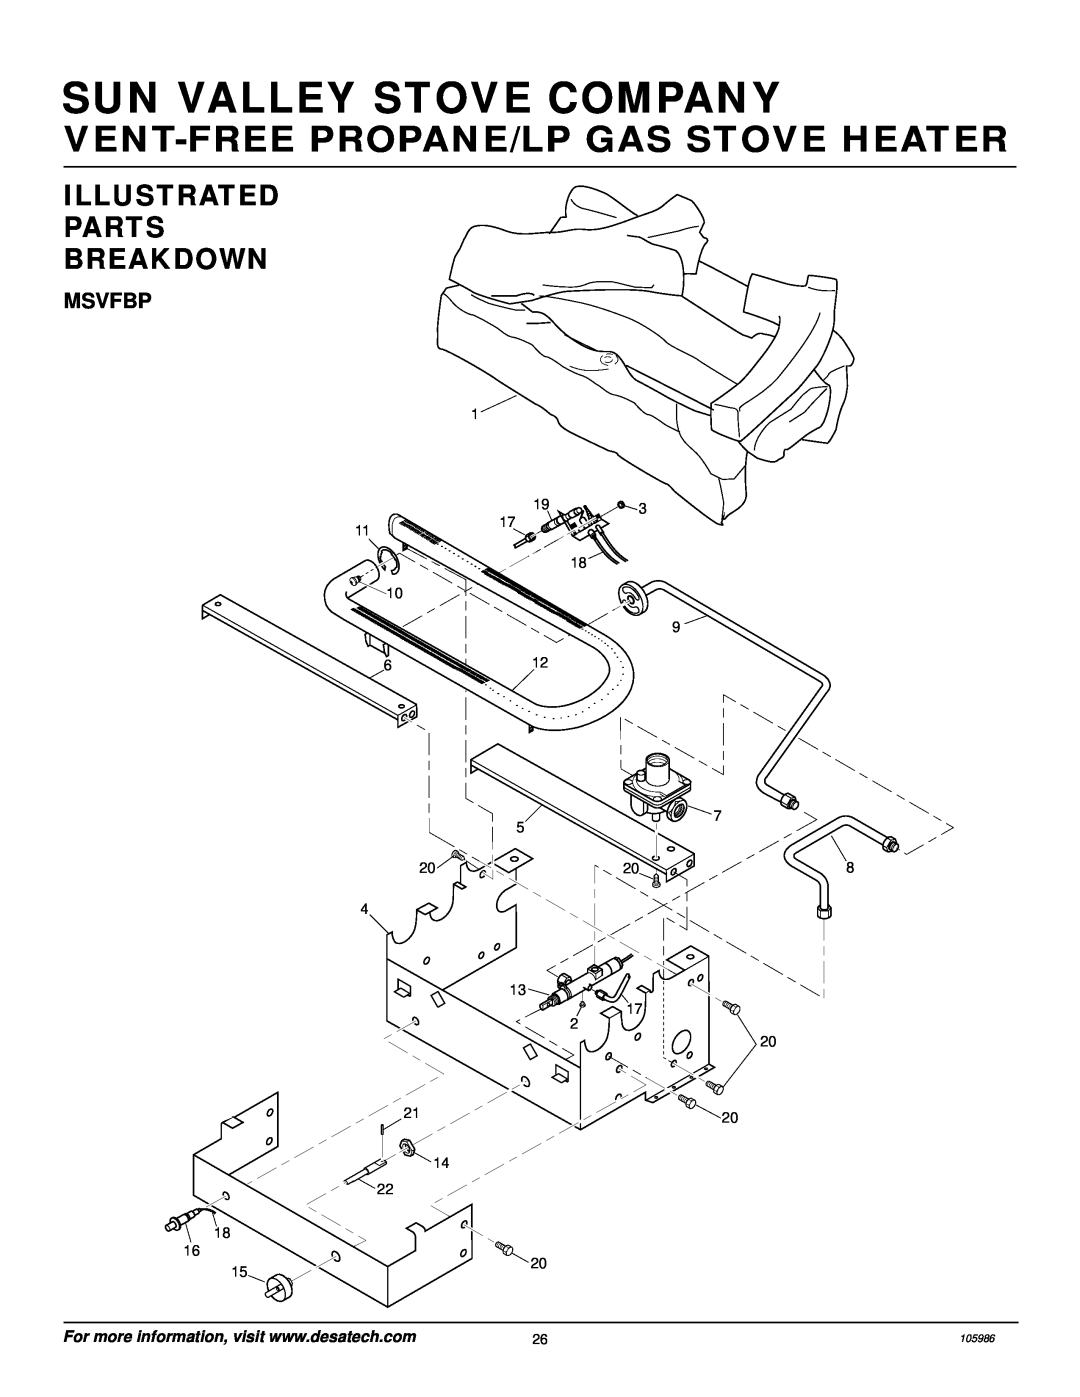 Desa MSVFBP Msvfbp, Sun Valley Stove Company, Vent-Freepropane/Lp Gas Stove Heater, Illustrated Parts Breakdown, 105986 